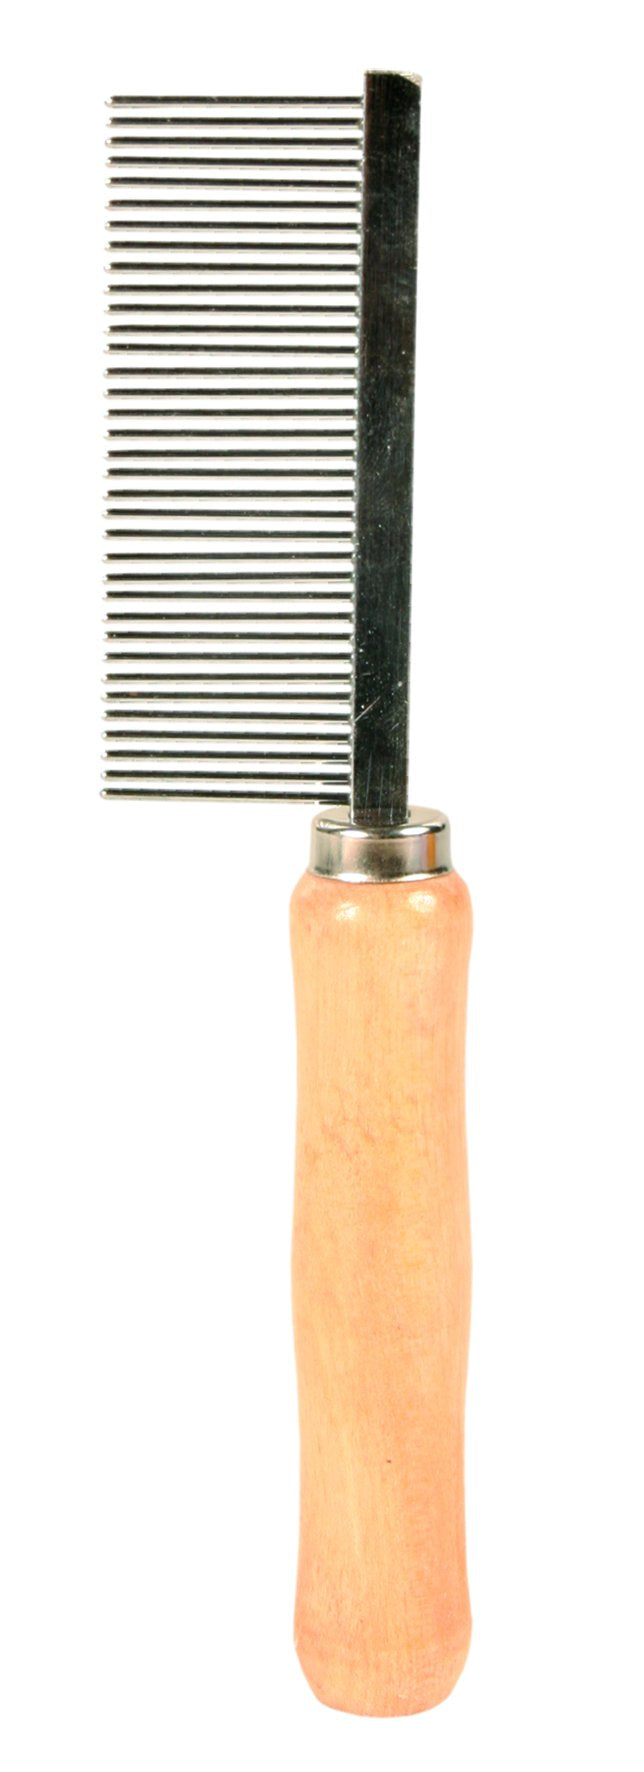 2391 Comb, wooden handle, medium teeth, 18 cm